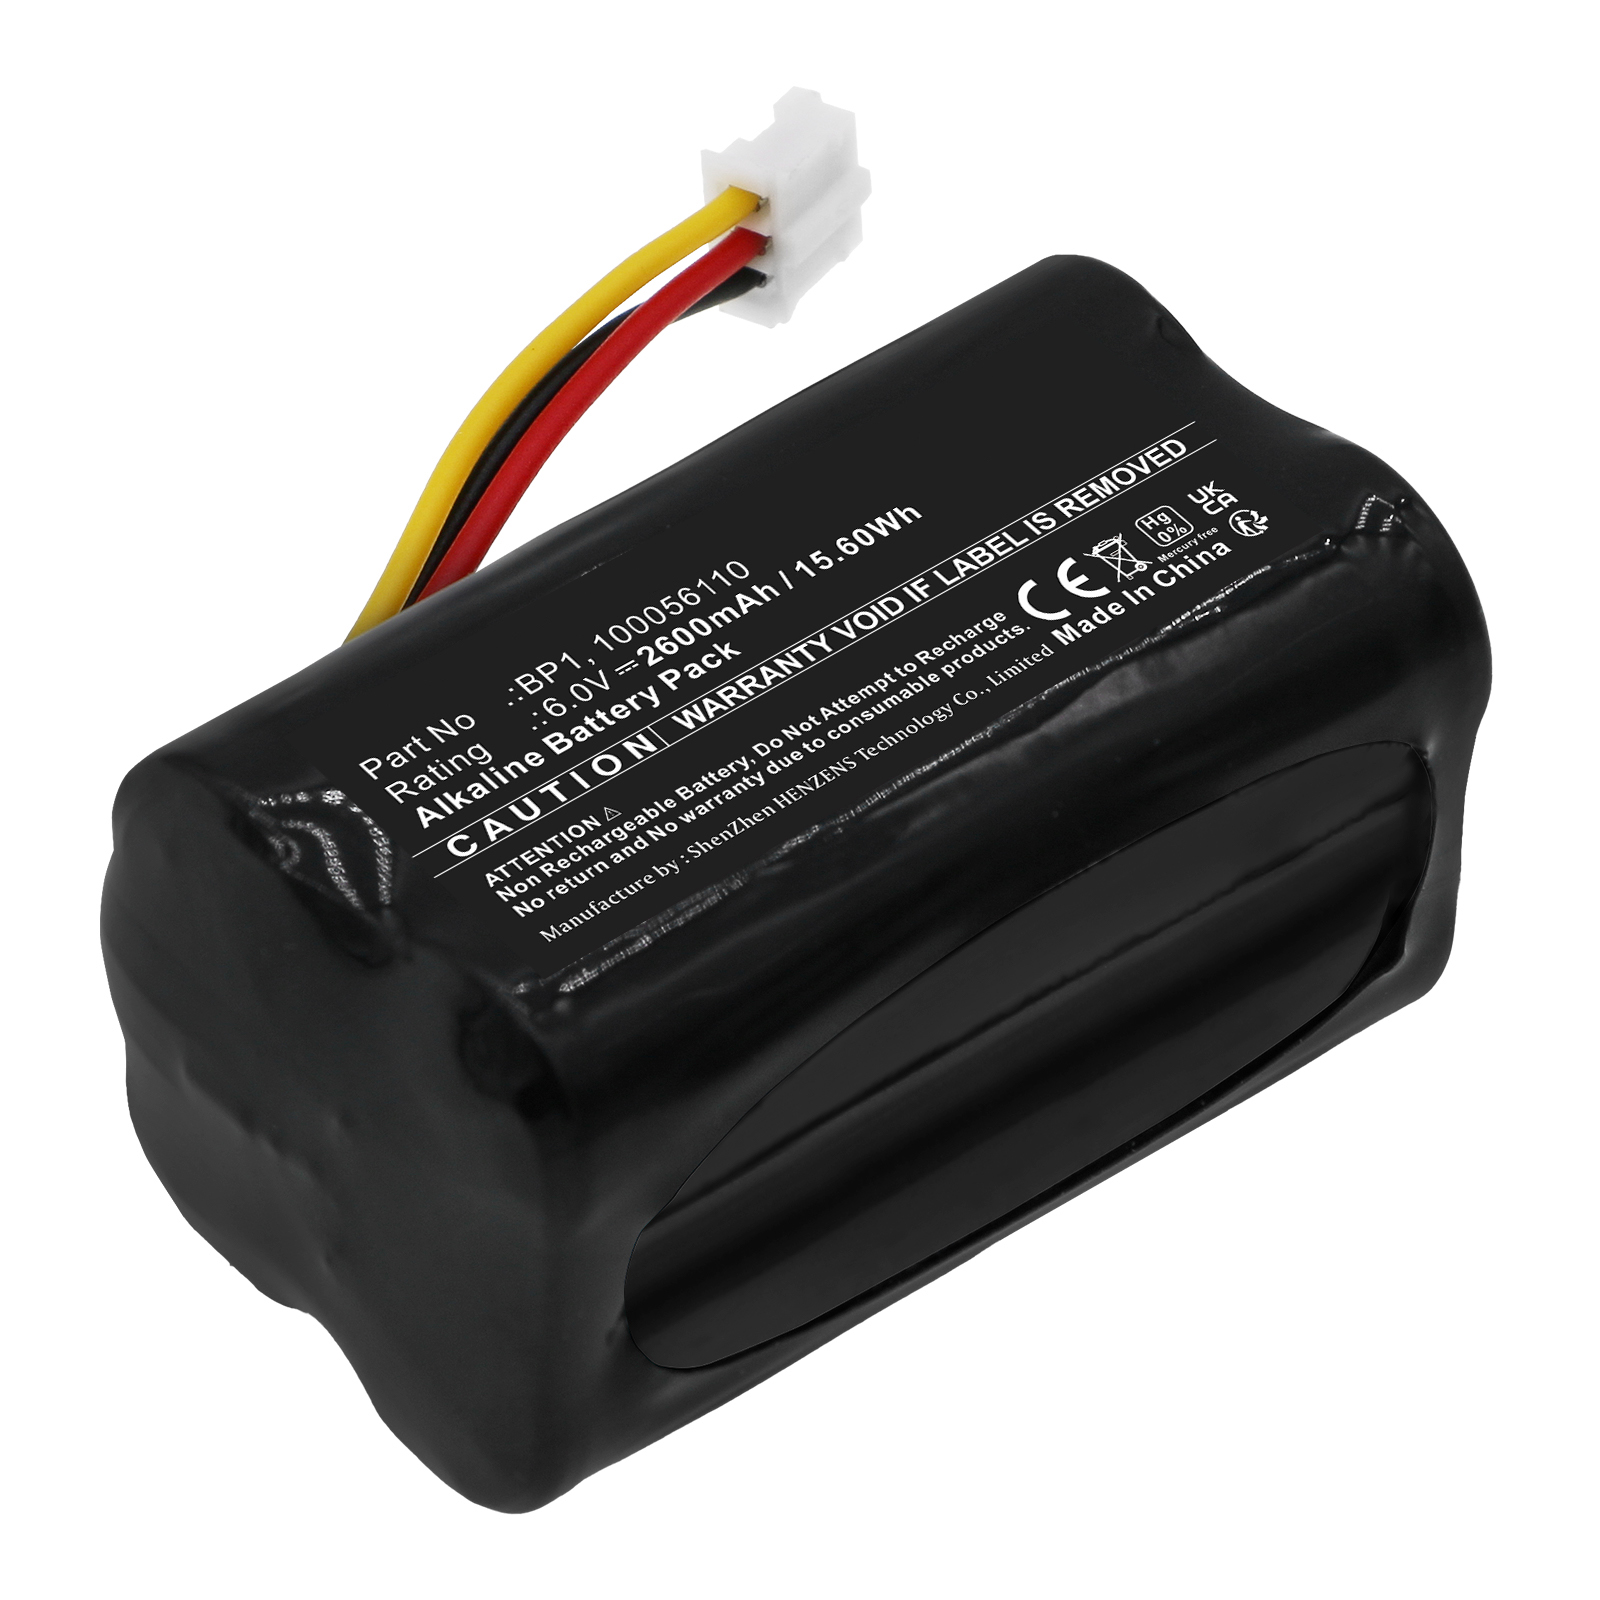 Synergy Digital Alarm System Battery, Compatible with Telenot BP1 Alarm System Battery (Alkaline, 6V, 2600mAh)